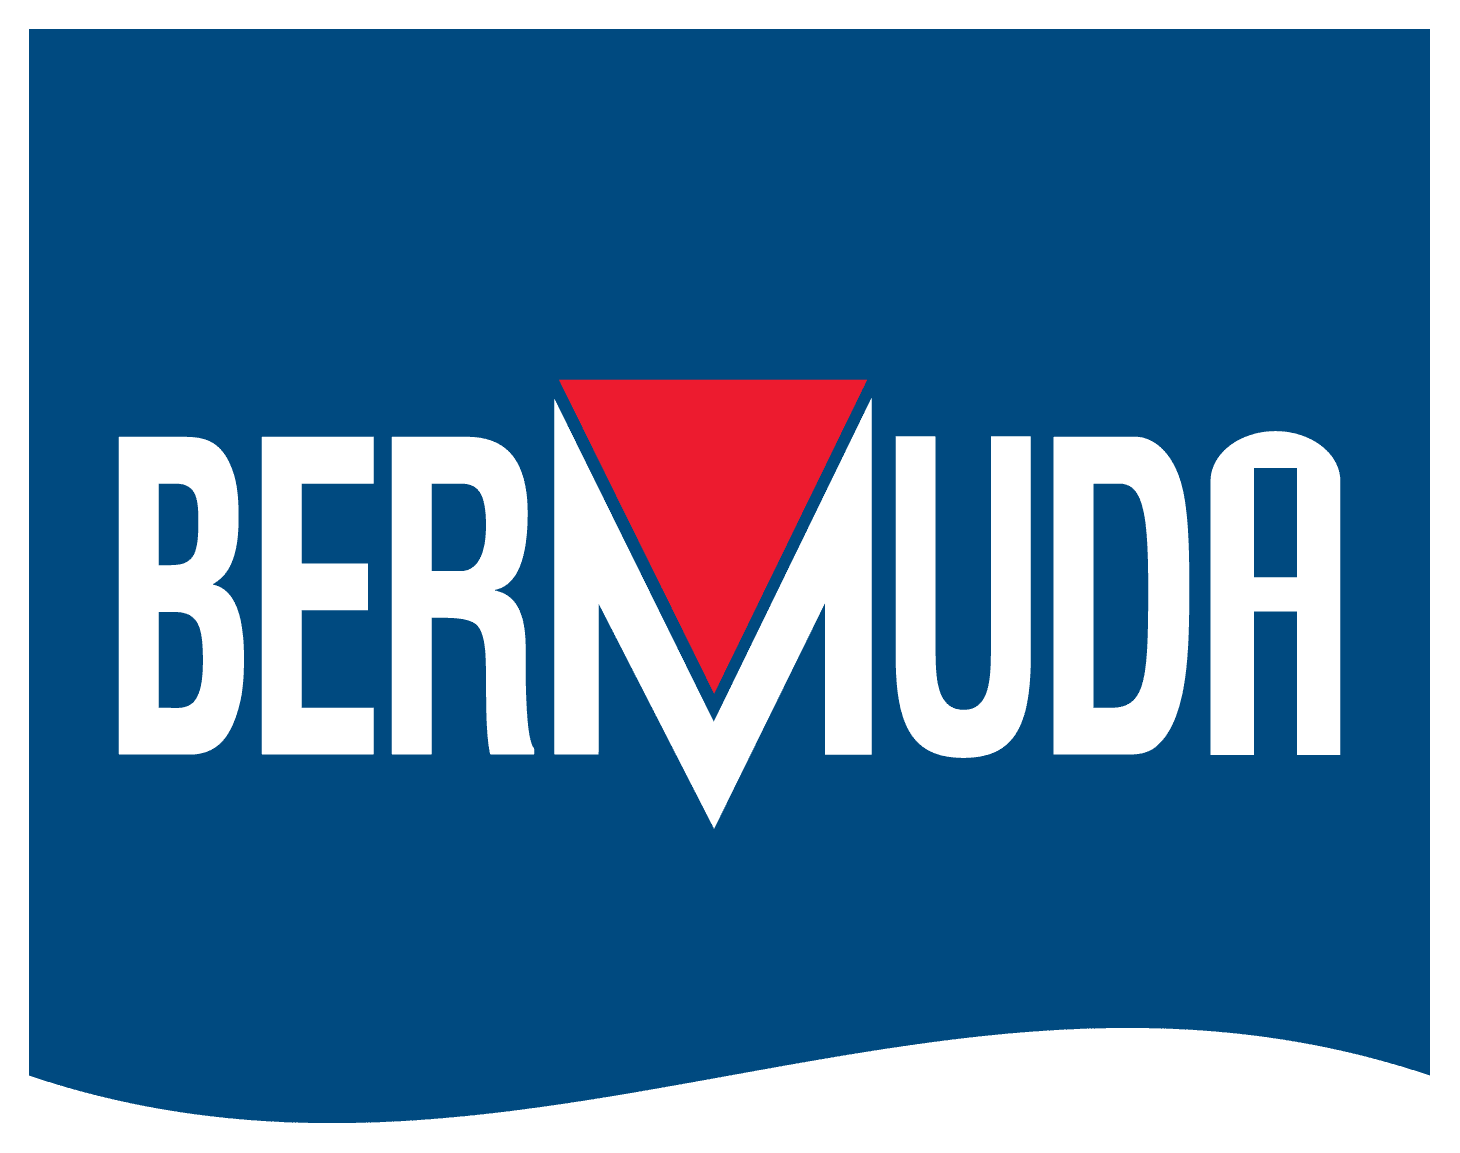 Bermuda Pumps